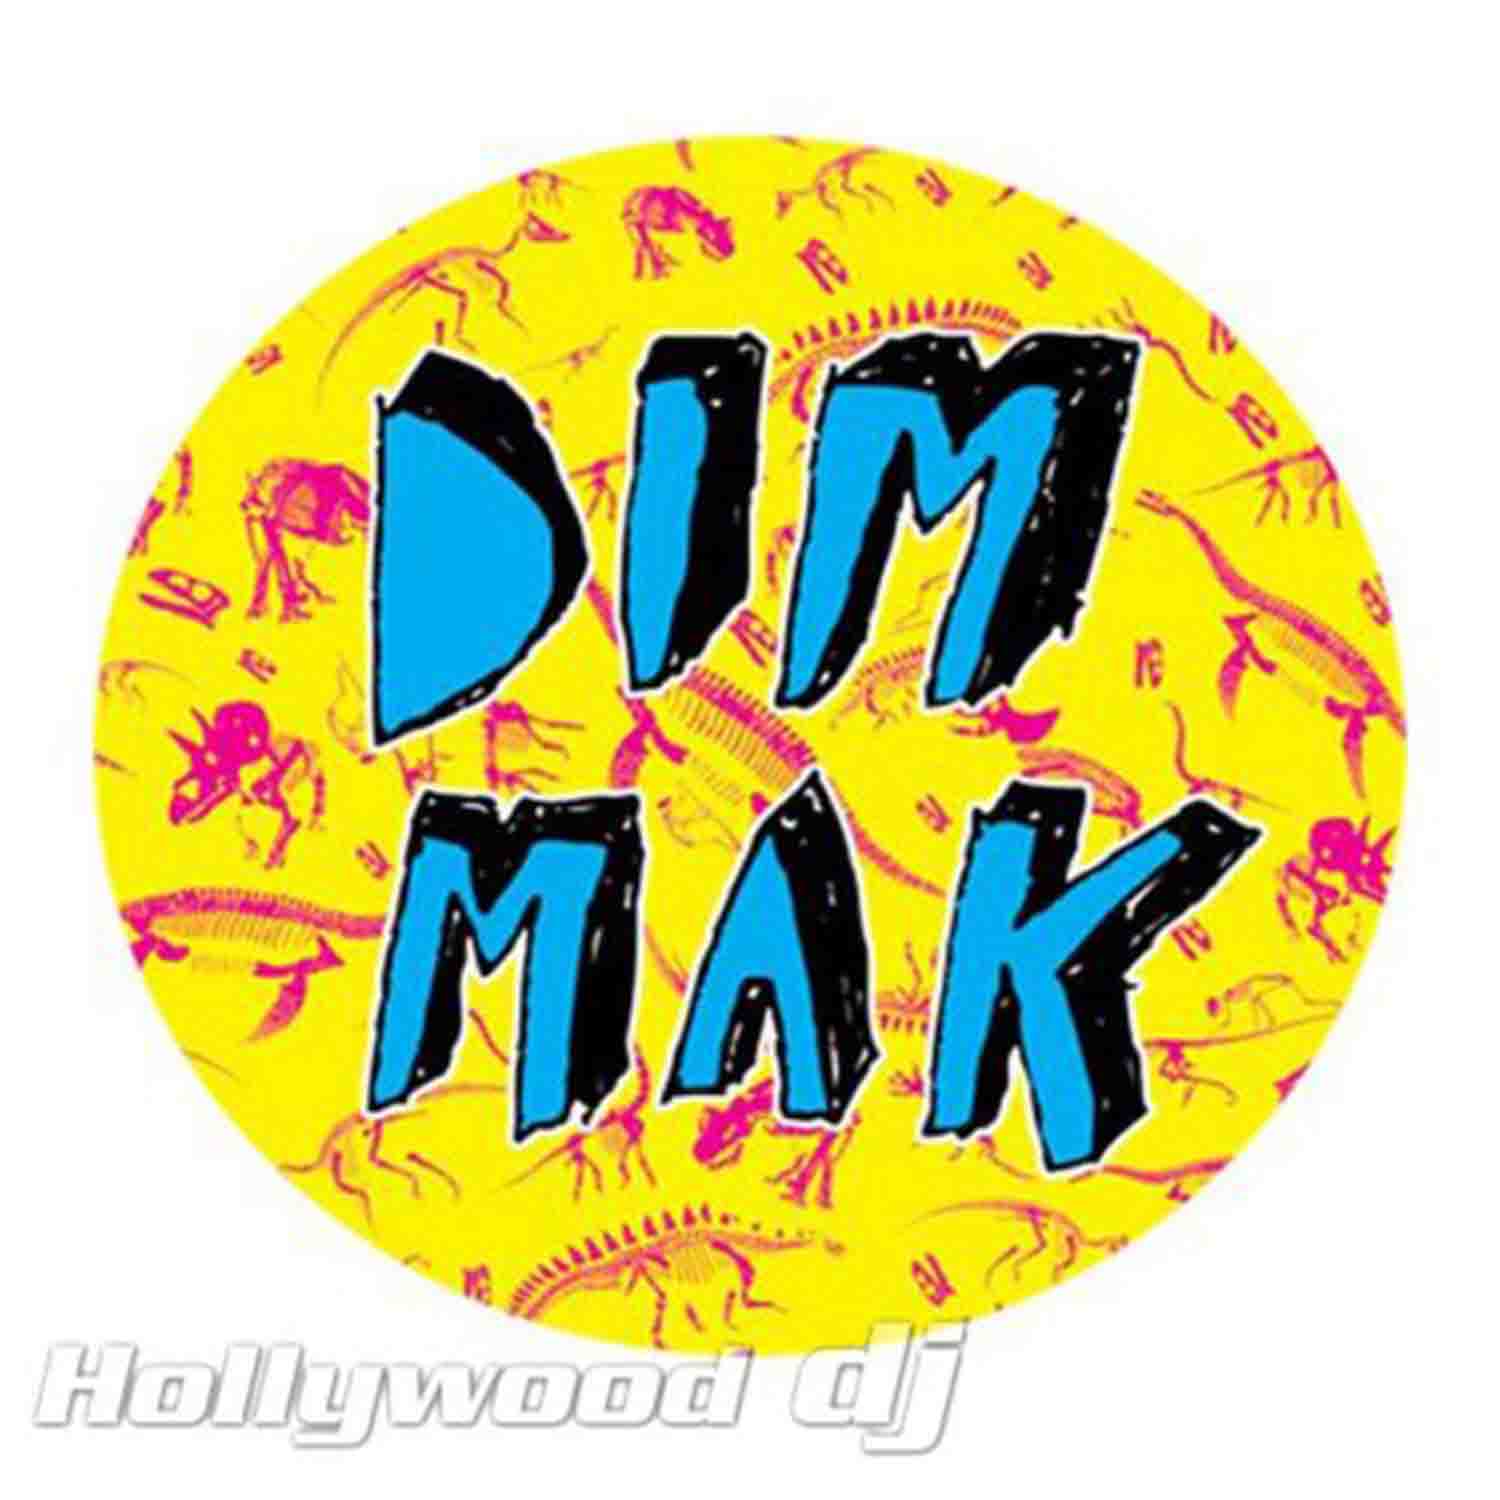 Sicmats DJ Turntable Slipmats 'DIM MAK COLOR' Slip Mat Sic Mats Steve Aoki - Pair - Hollywood DJ